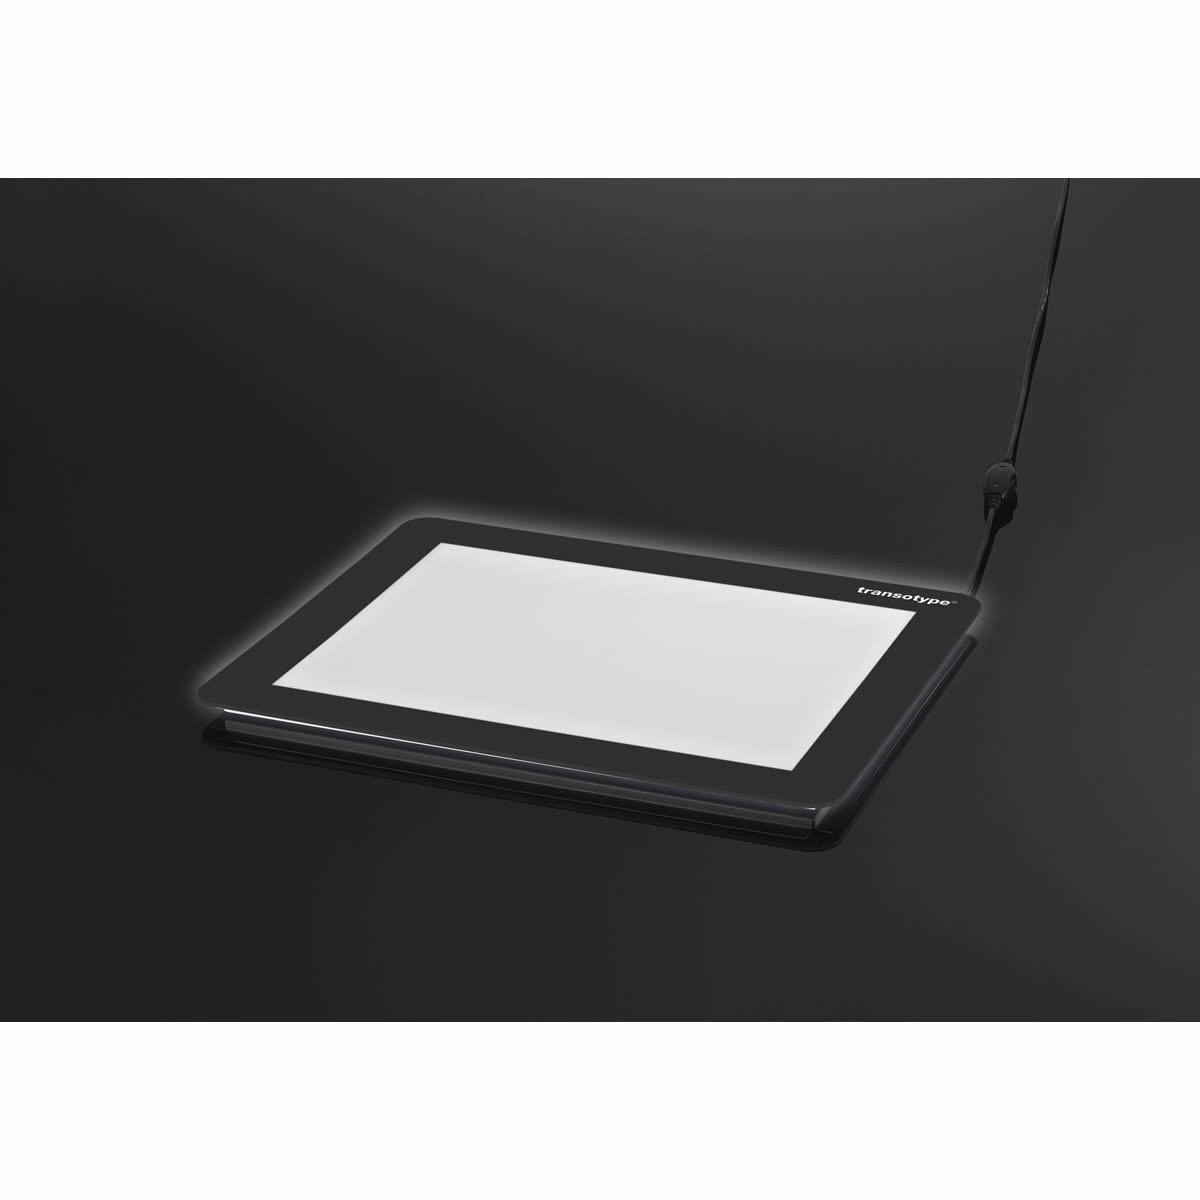 Transotype LED Drawing Light Table - Φωτεινή Επιφάνεια Σχεδίασης Α3